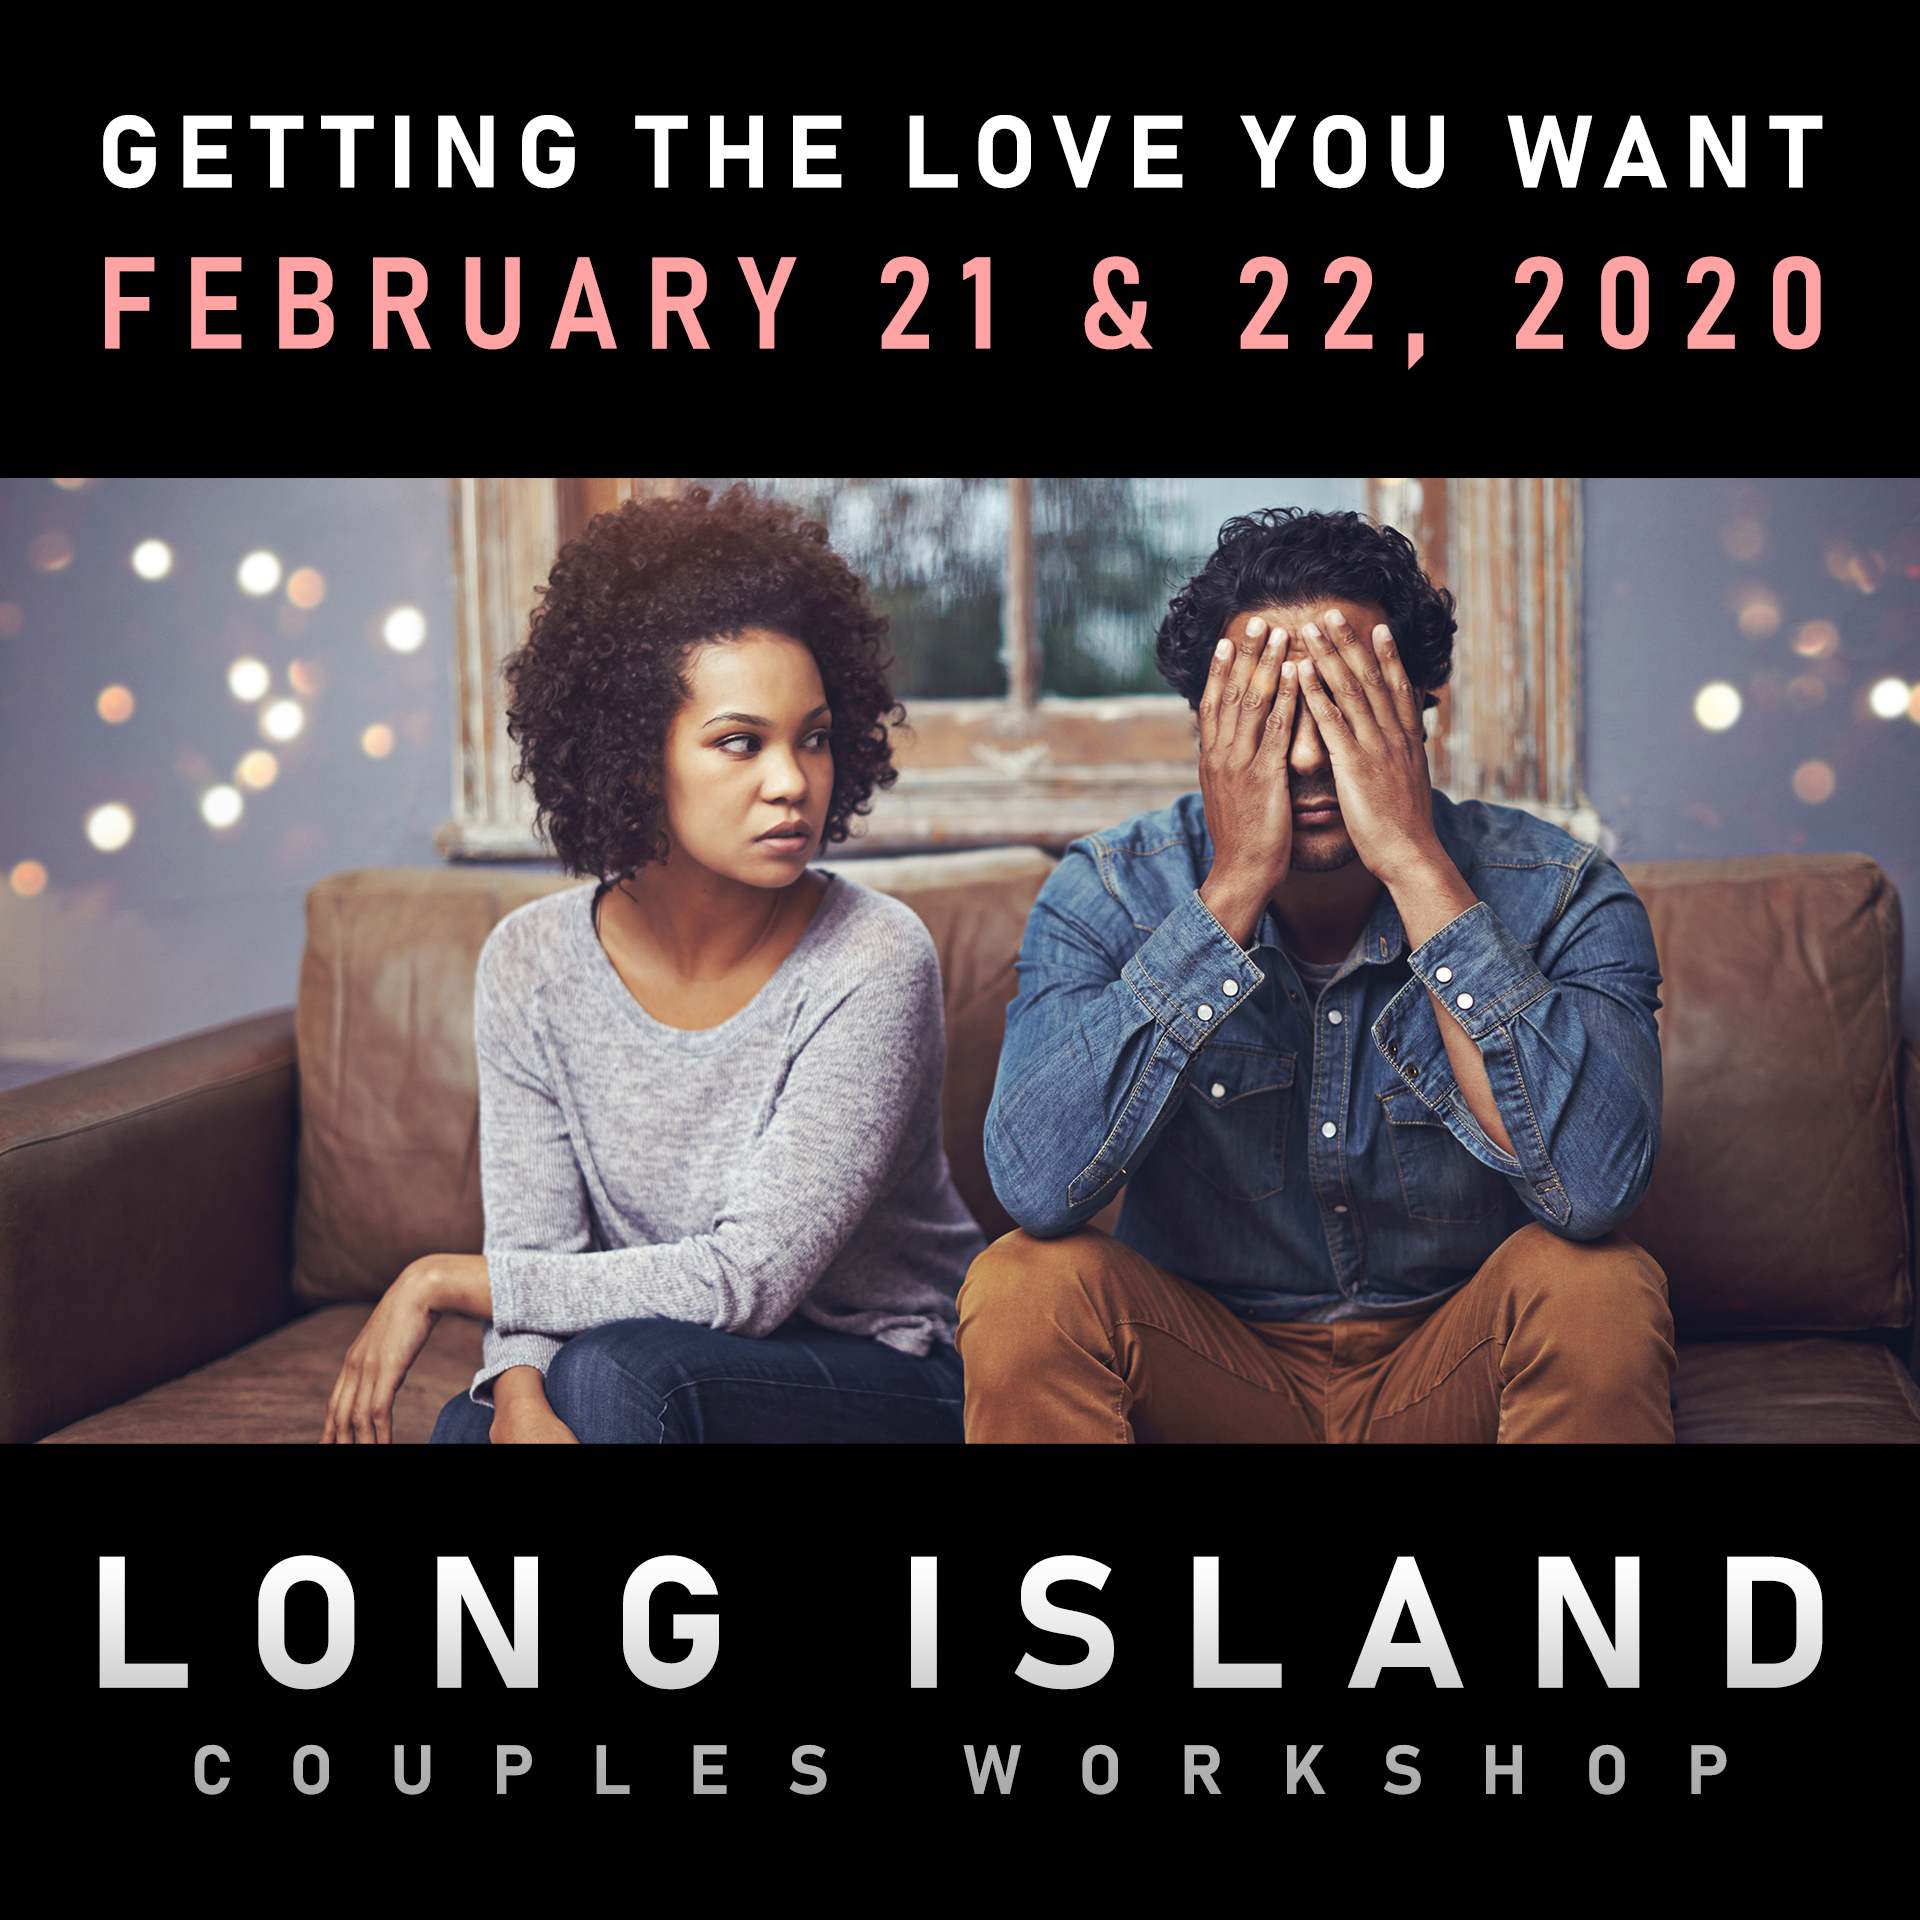 Couples Workshops for 2020